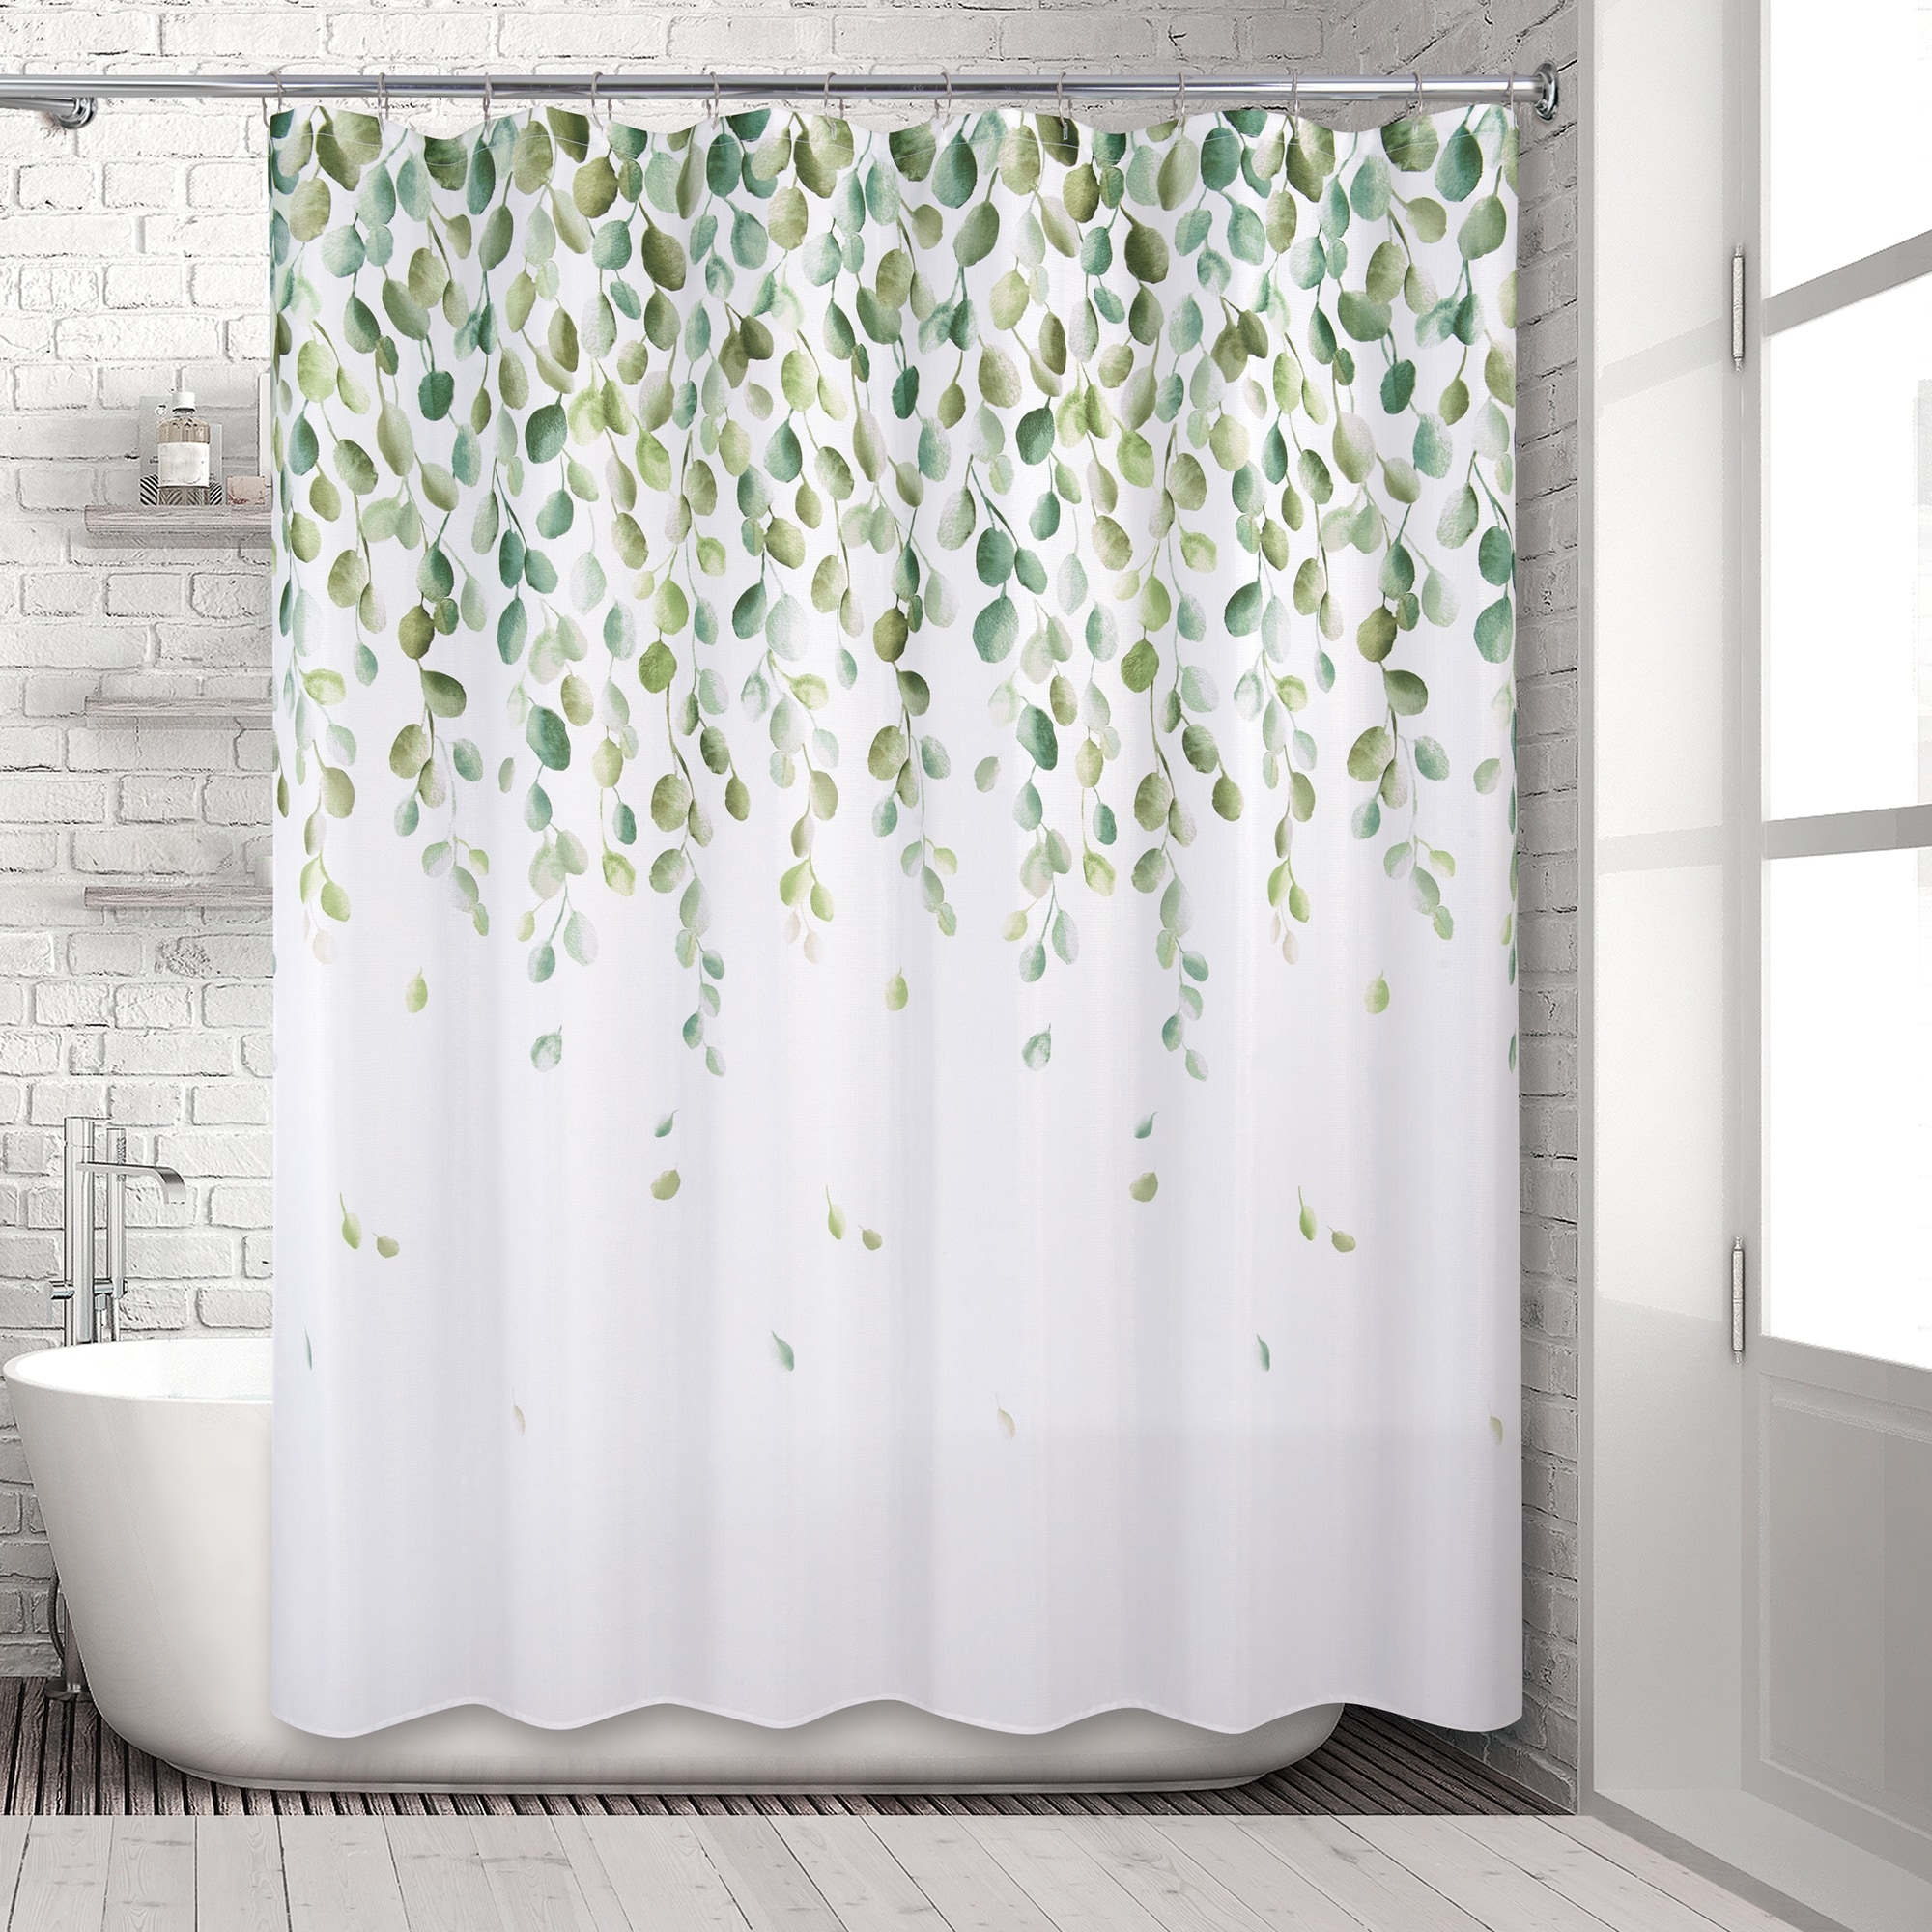 Shower Curtain Beige - Cascade